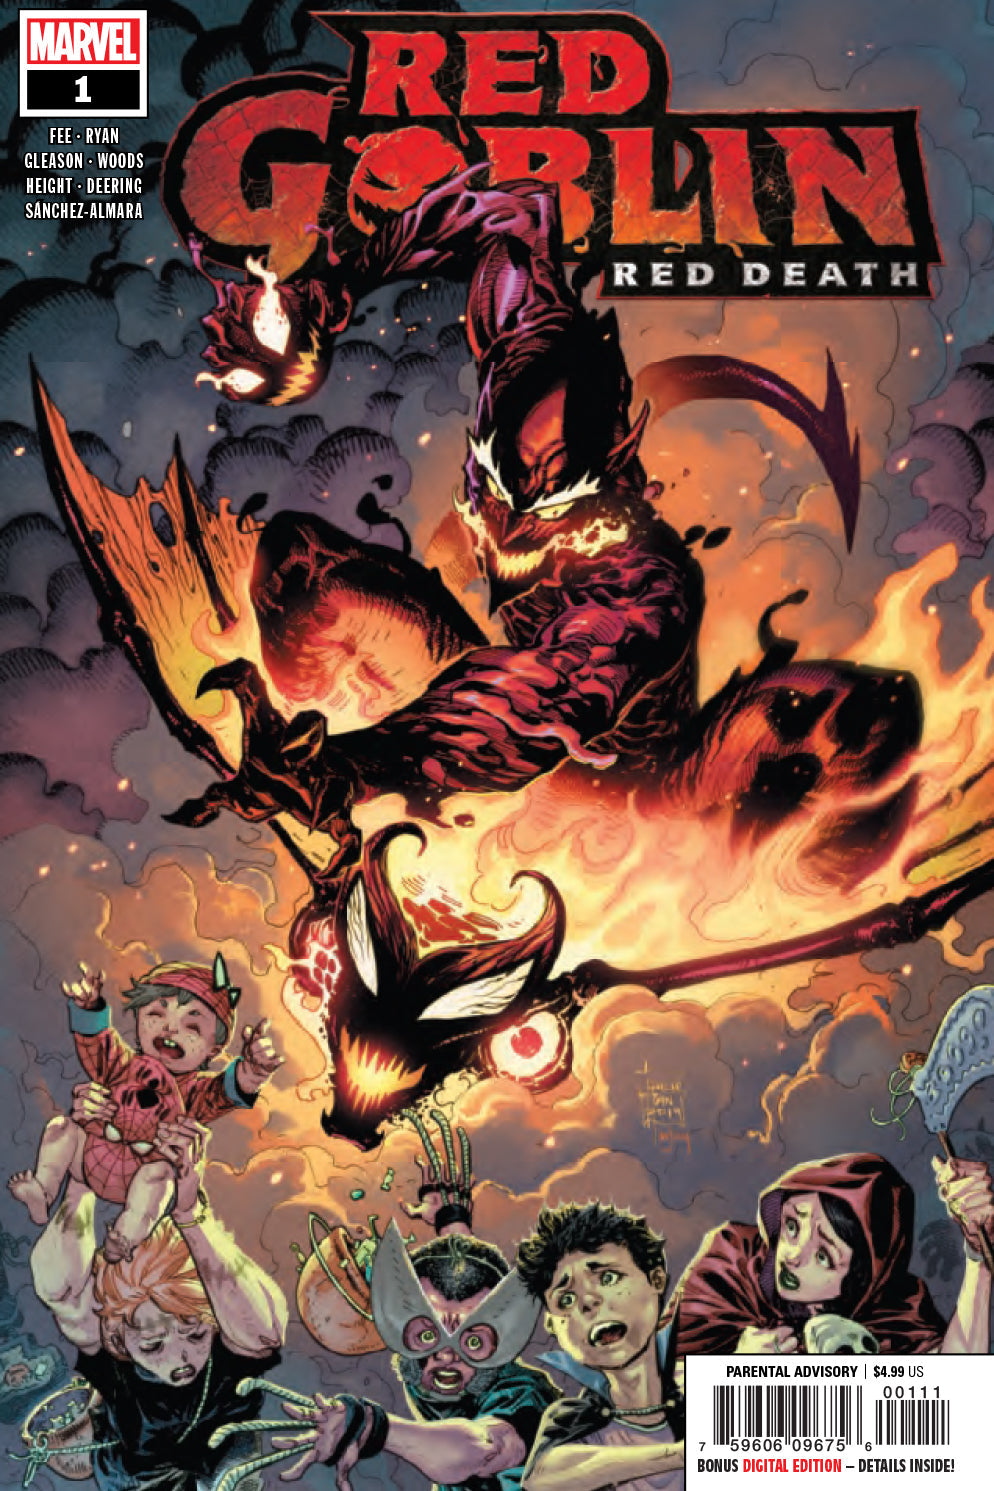 RED GOBLIN RED DEATH #1 - Comicbookeroo Australia